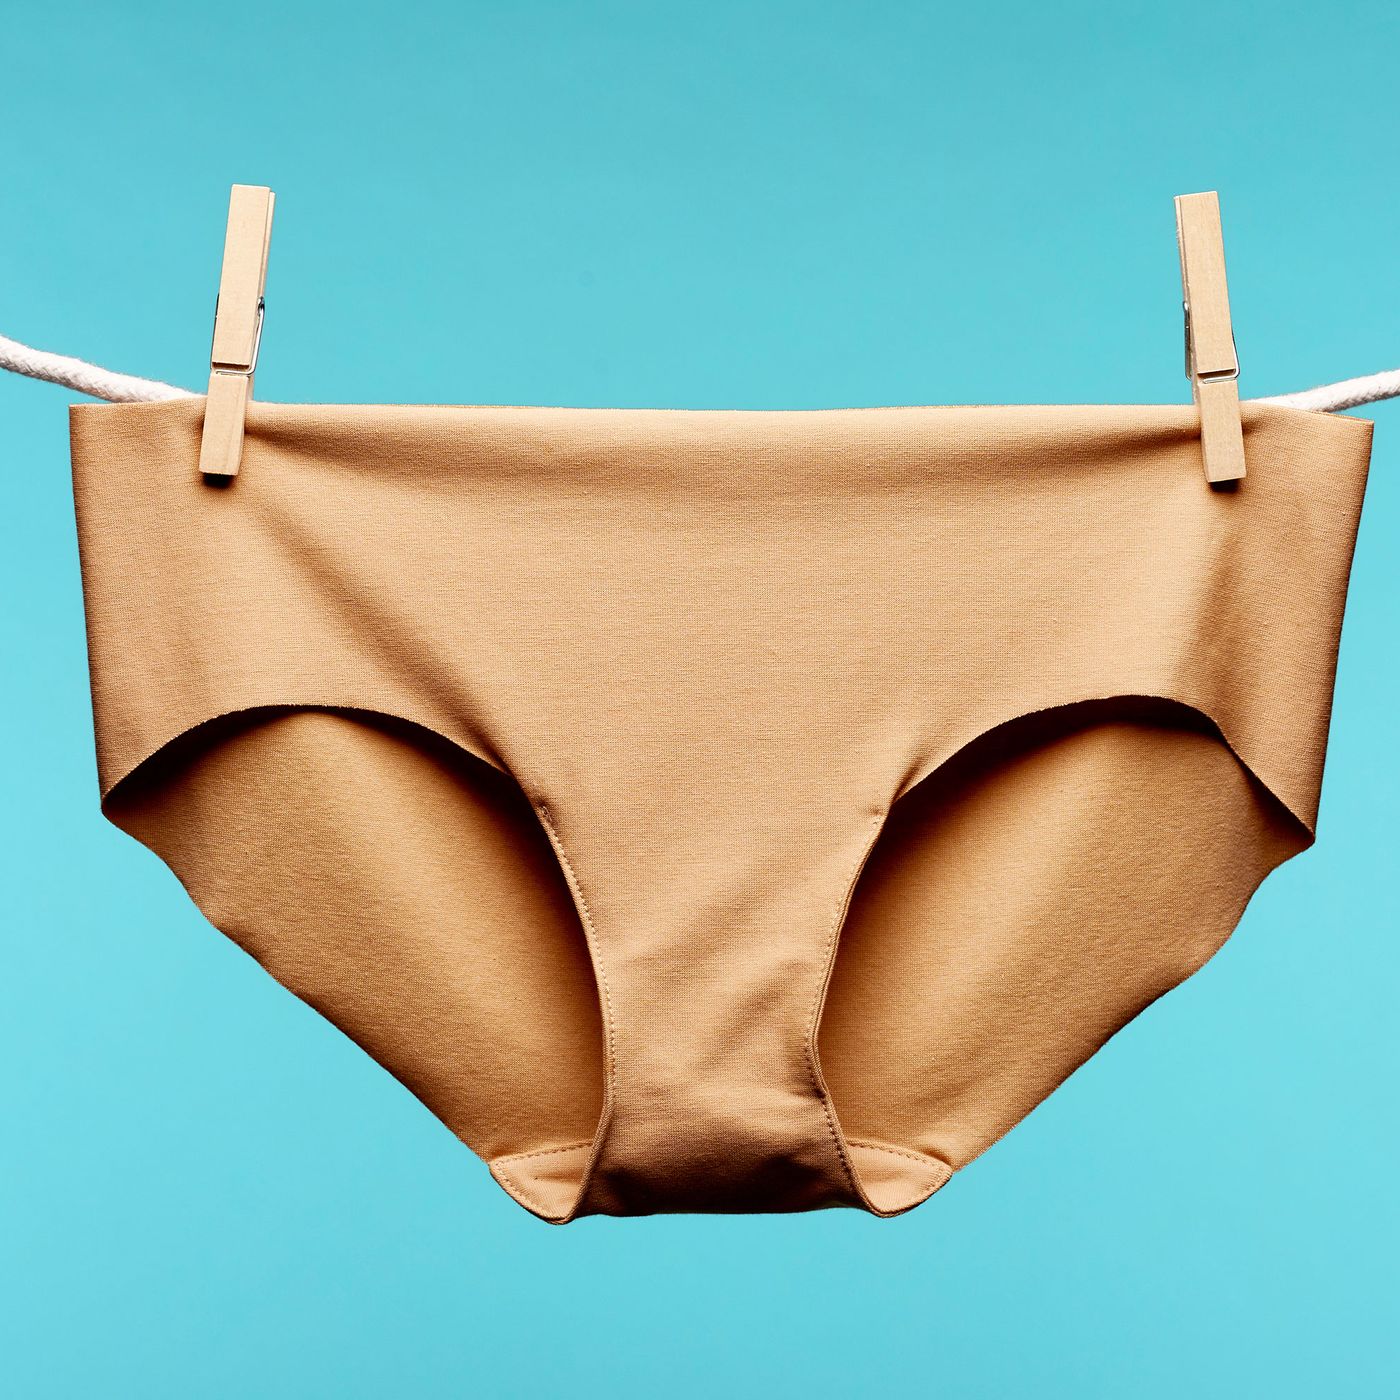 7 Essential Types of Underwear Styles for Women - Different